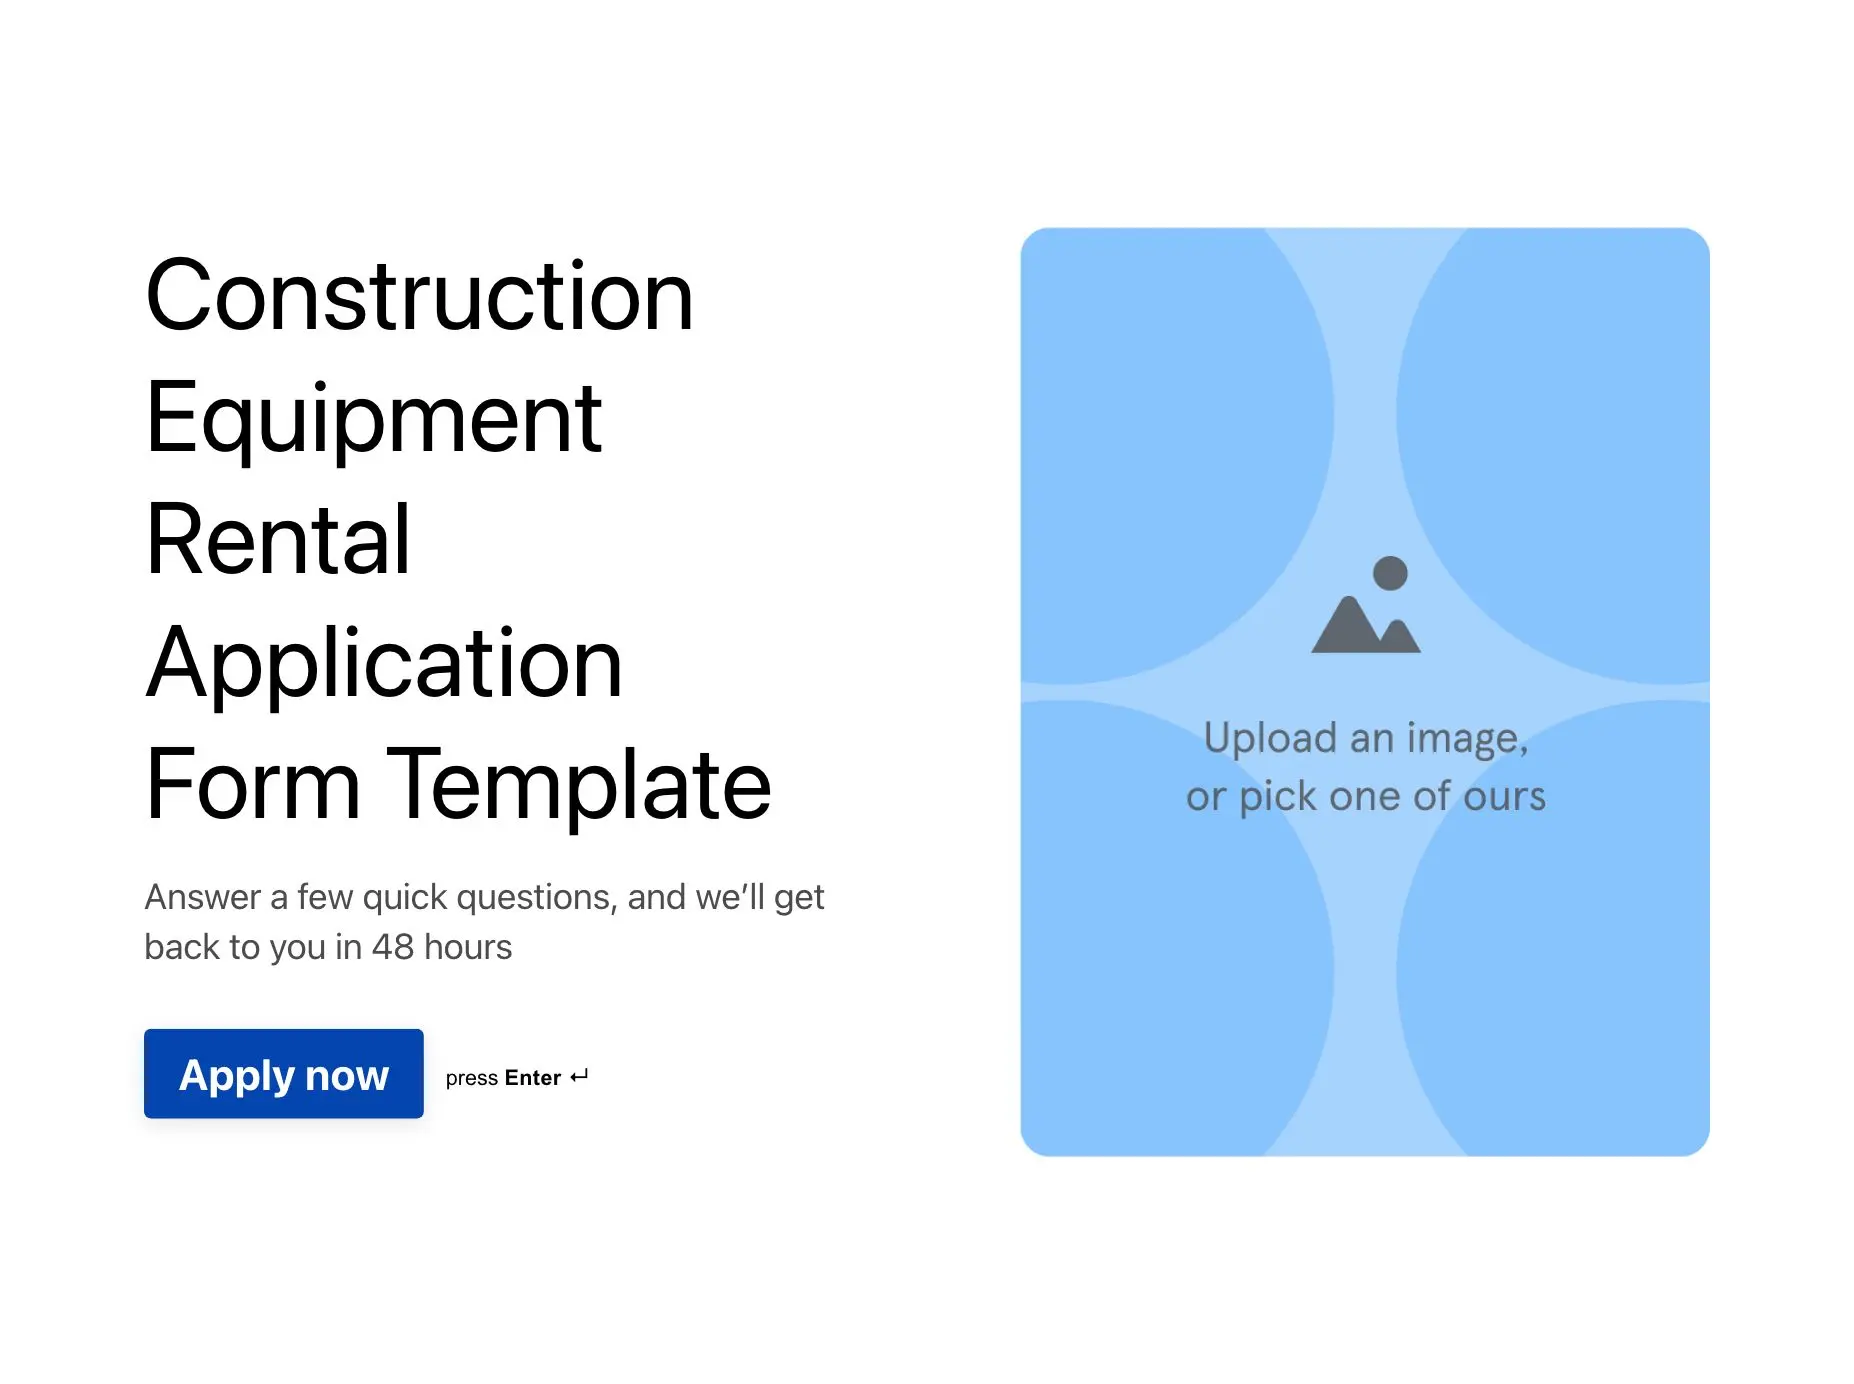 Construction Equipment Rental Application Form Template Hero